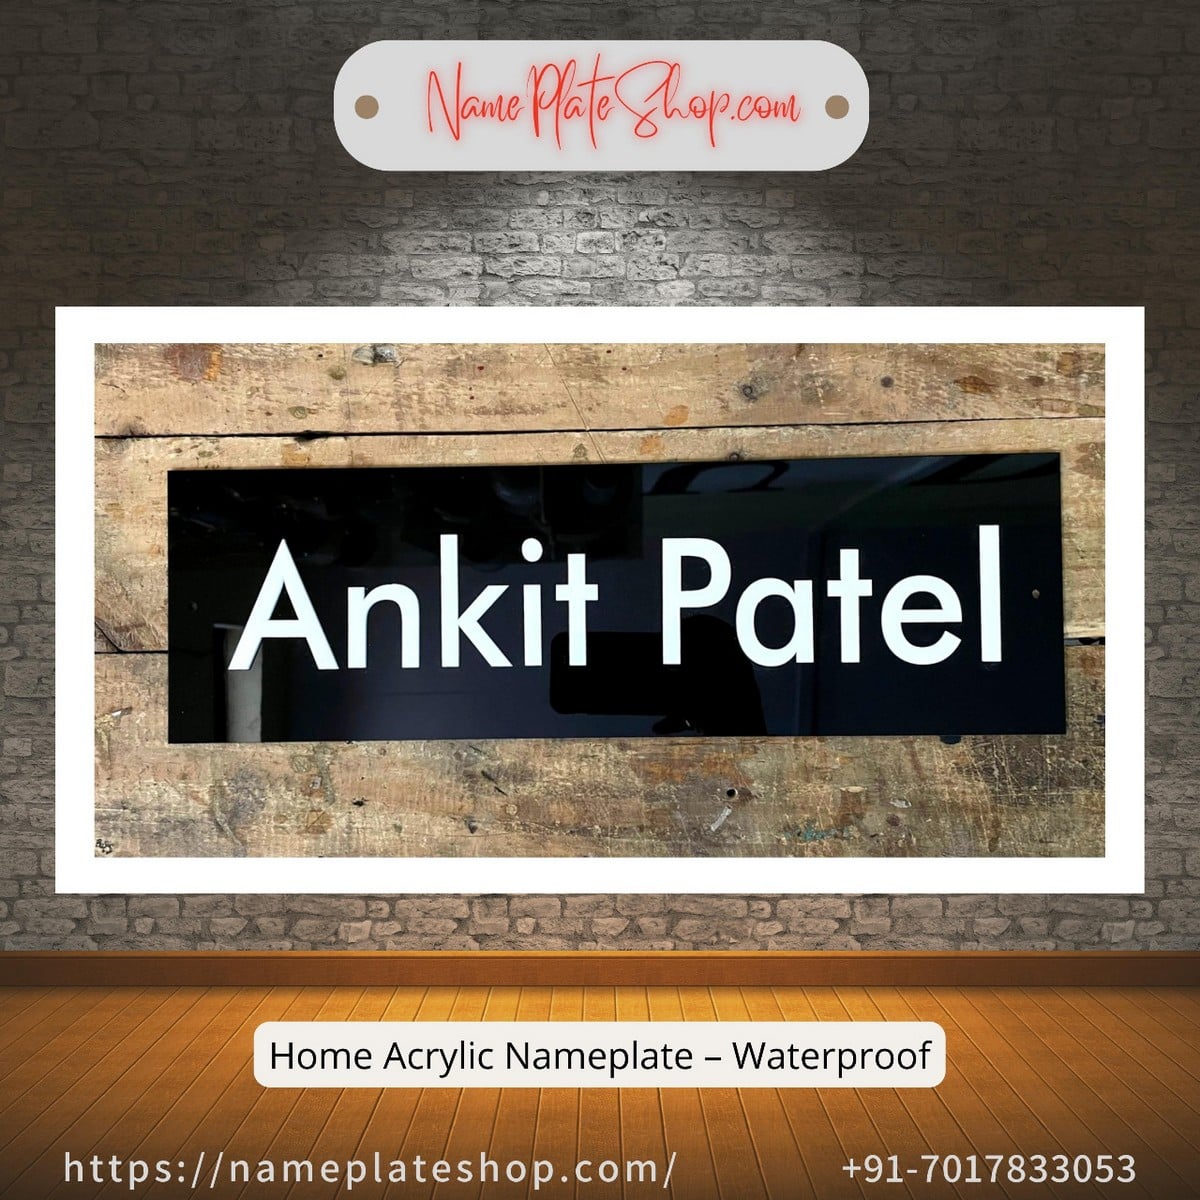 Waterproof Acrylic Name Plate From NamePlateShop